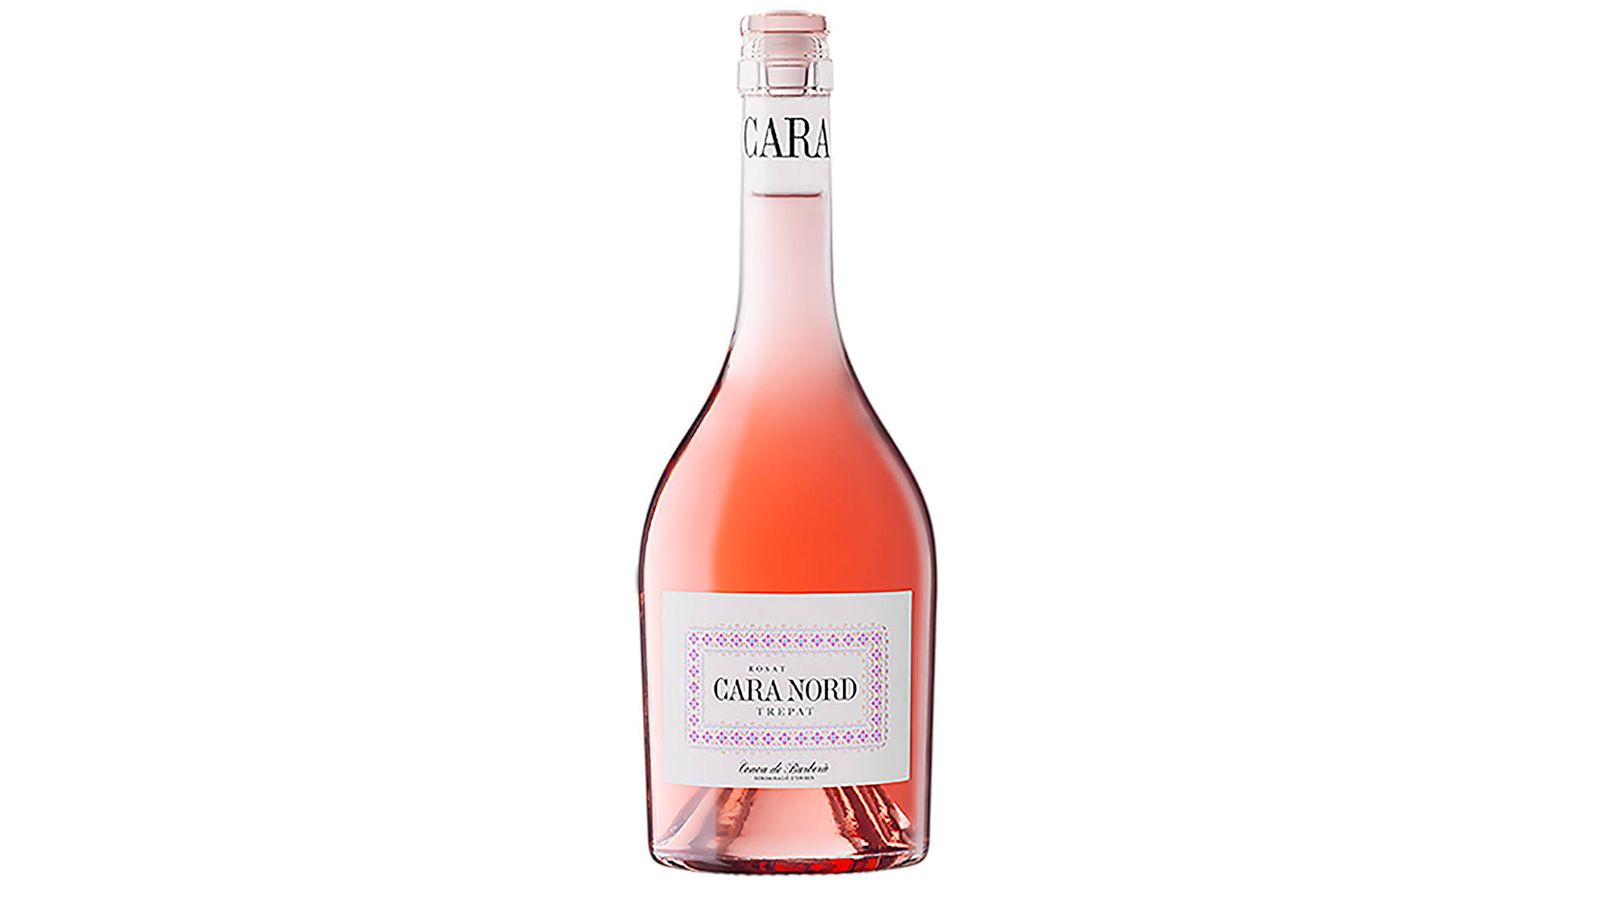 Nace Cara Nord Rosat 2018, un gran vino rosado de alta montan~a